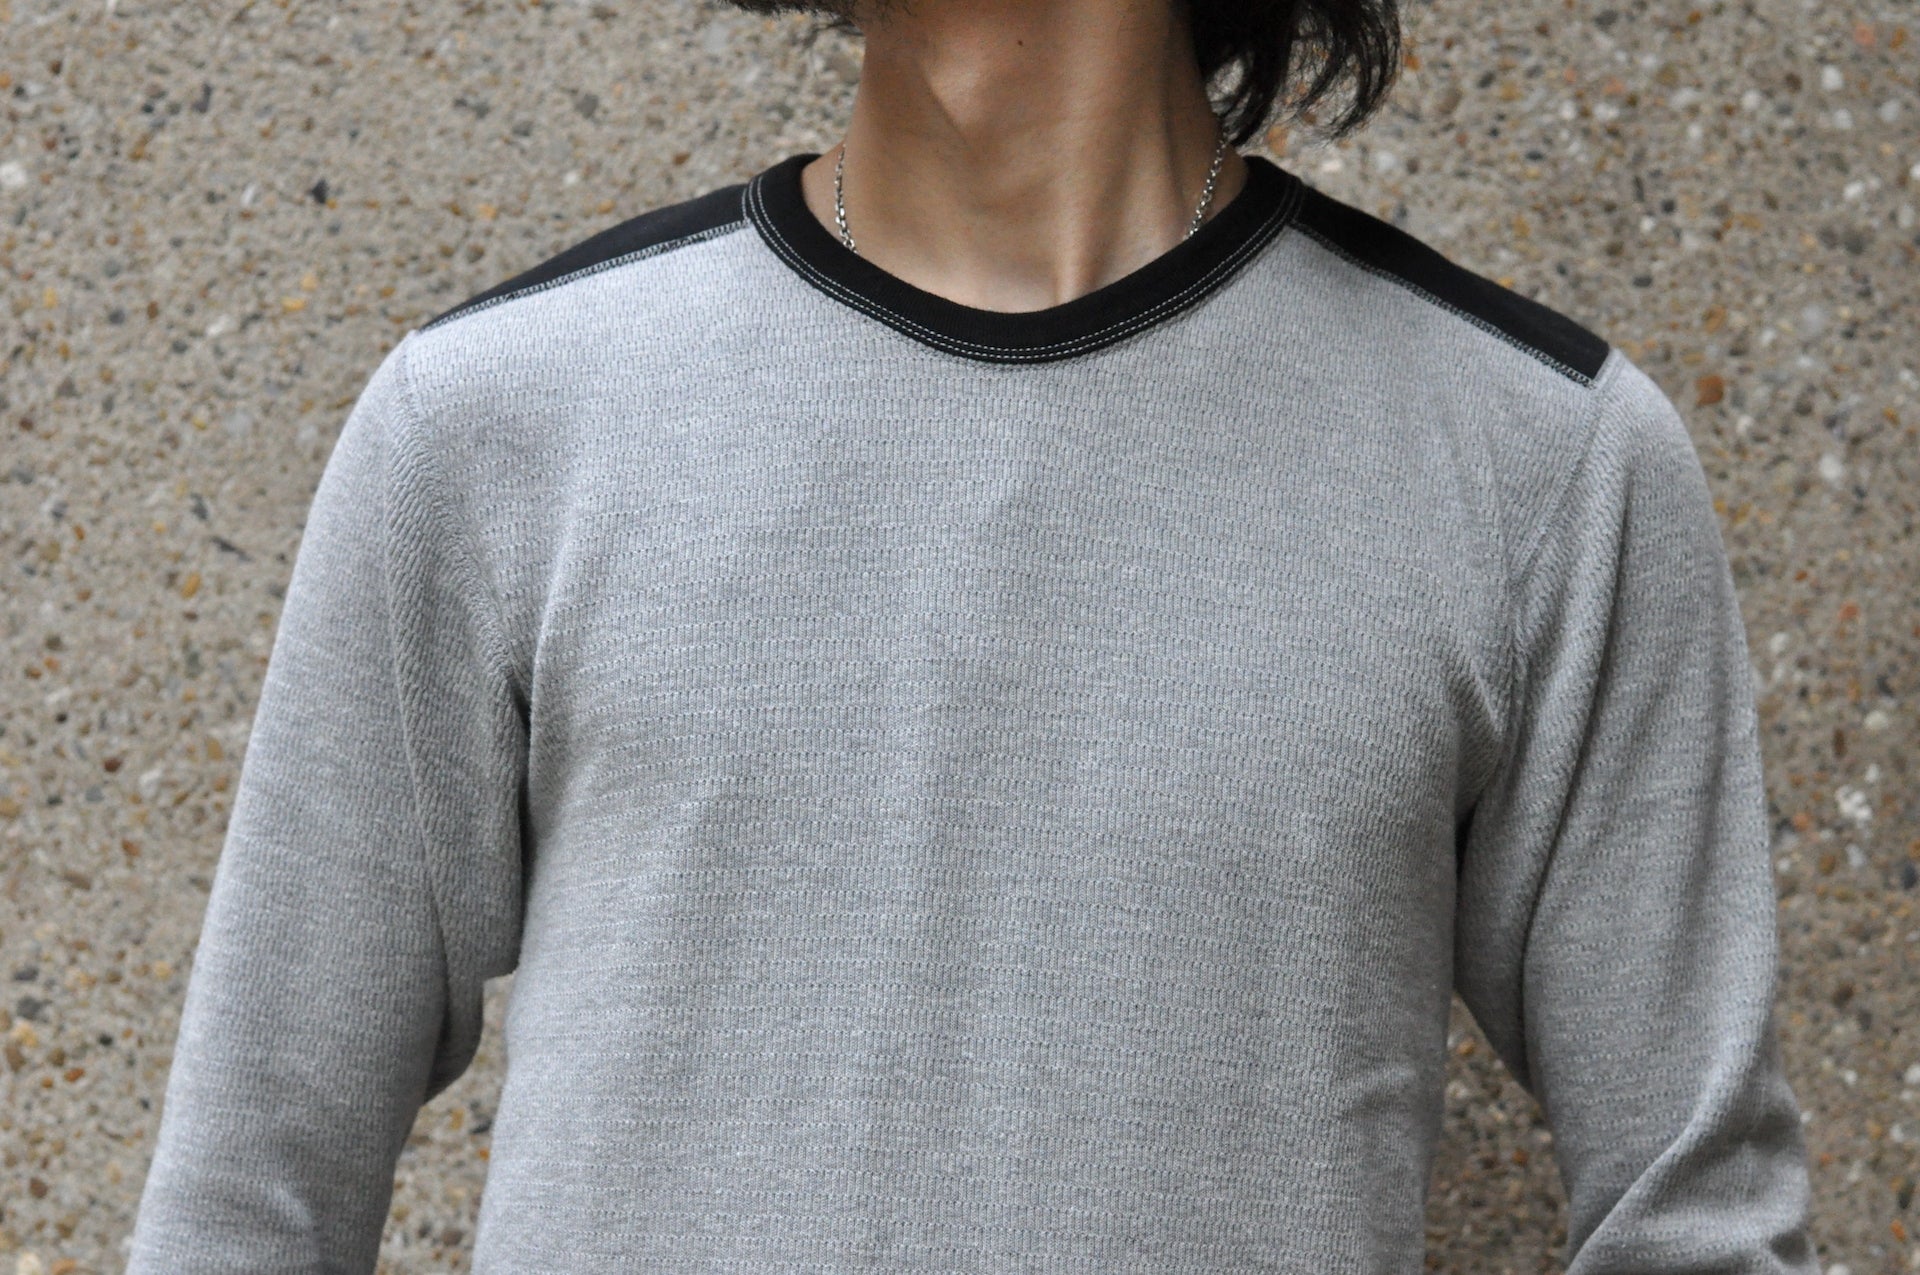 The Flat Head "Panneled" L/S Thermal Shirt (Grey X Black)